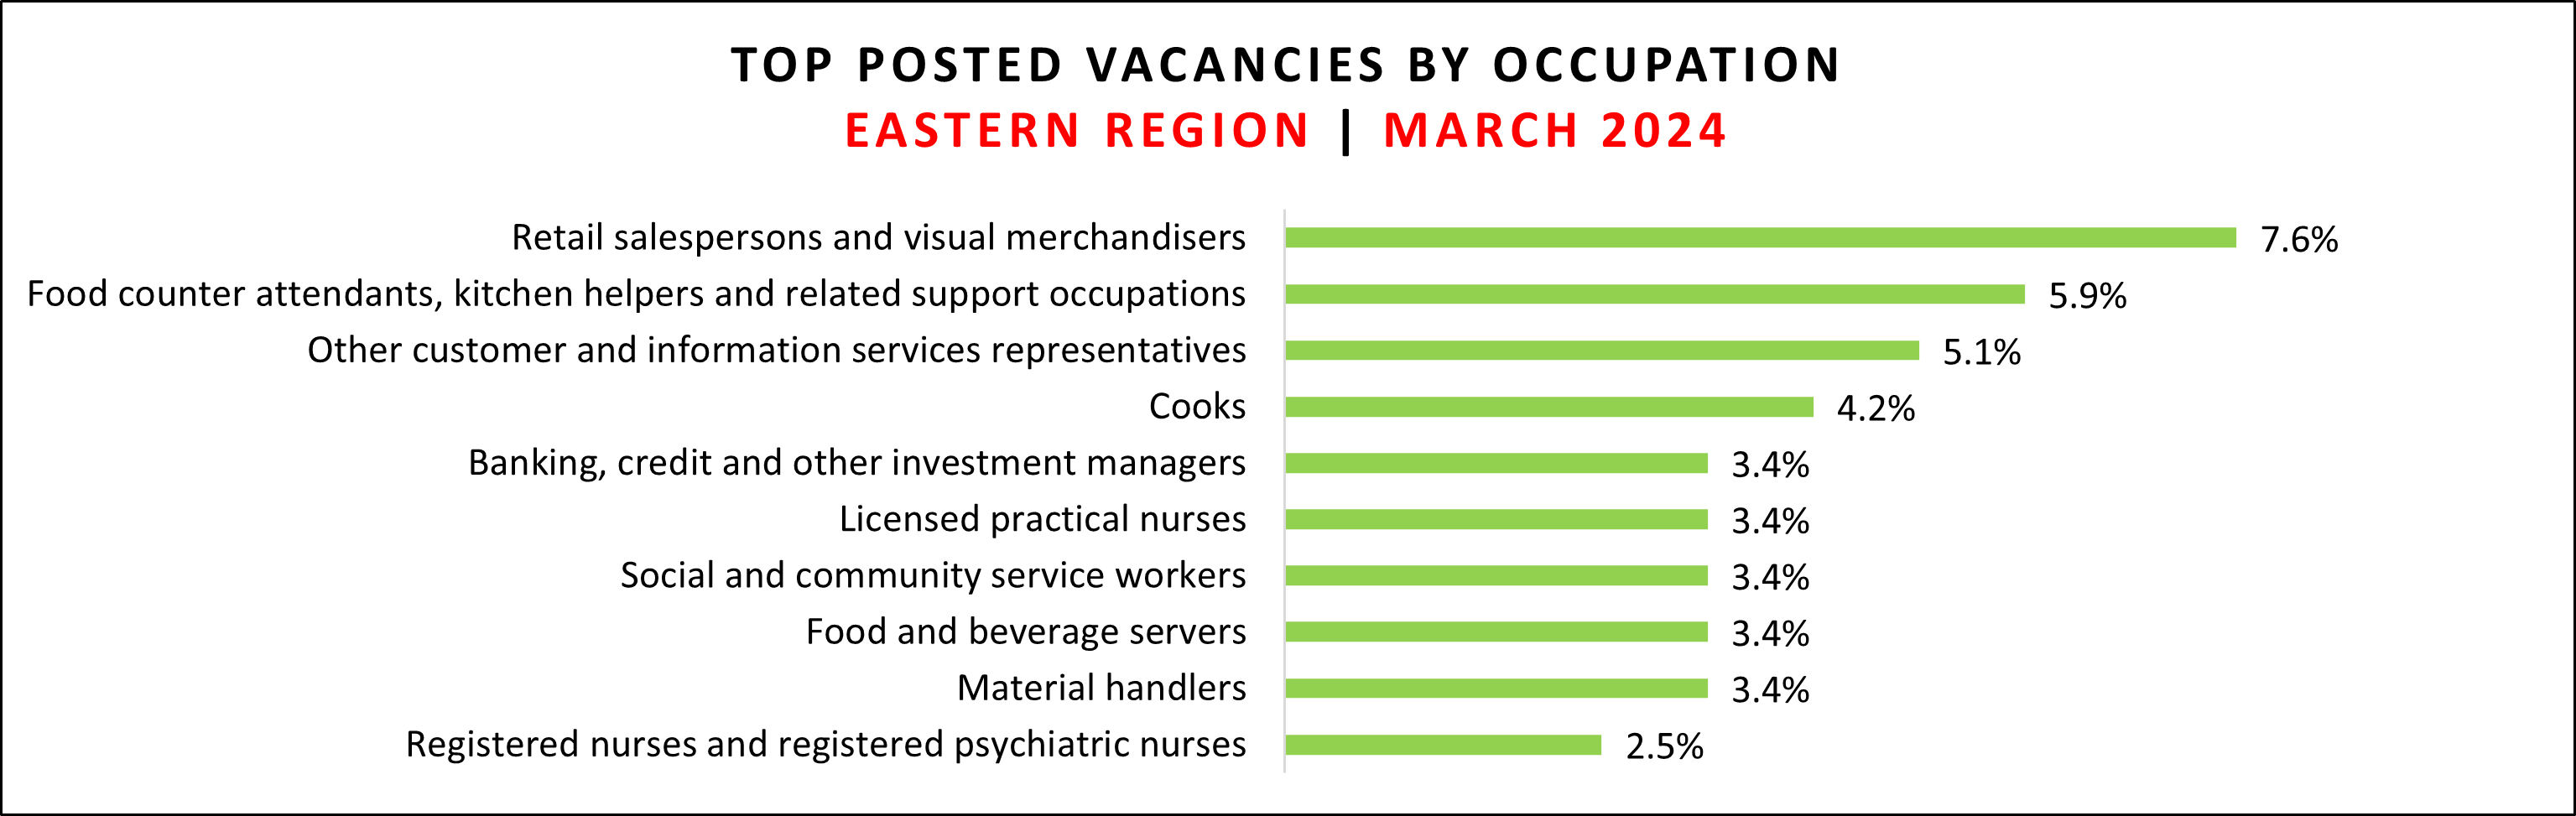 Jab vacancy data for Eastern region in March 2024.